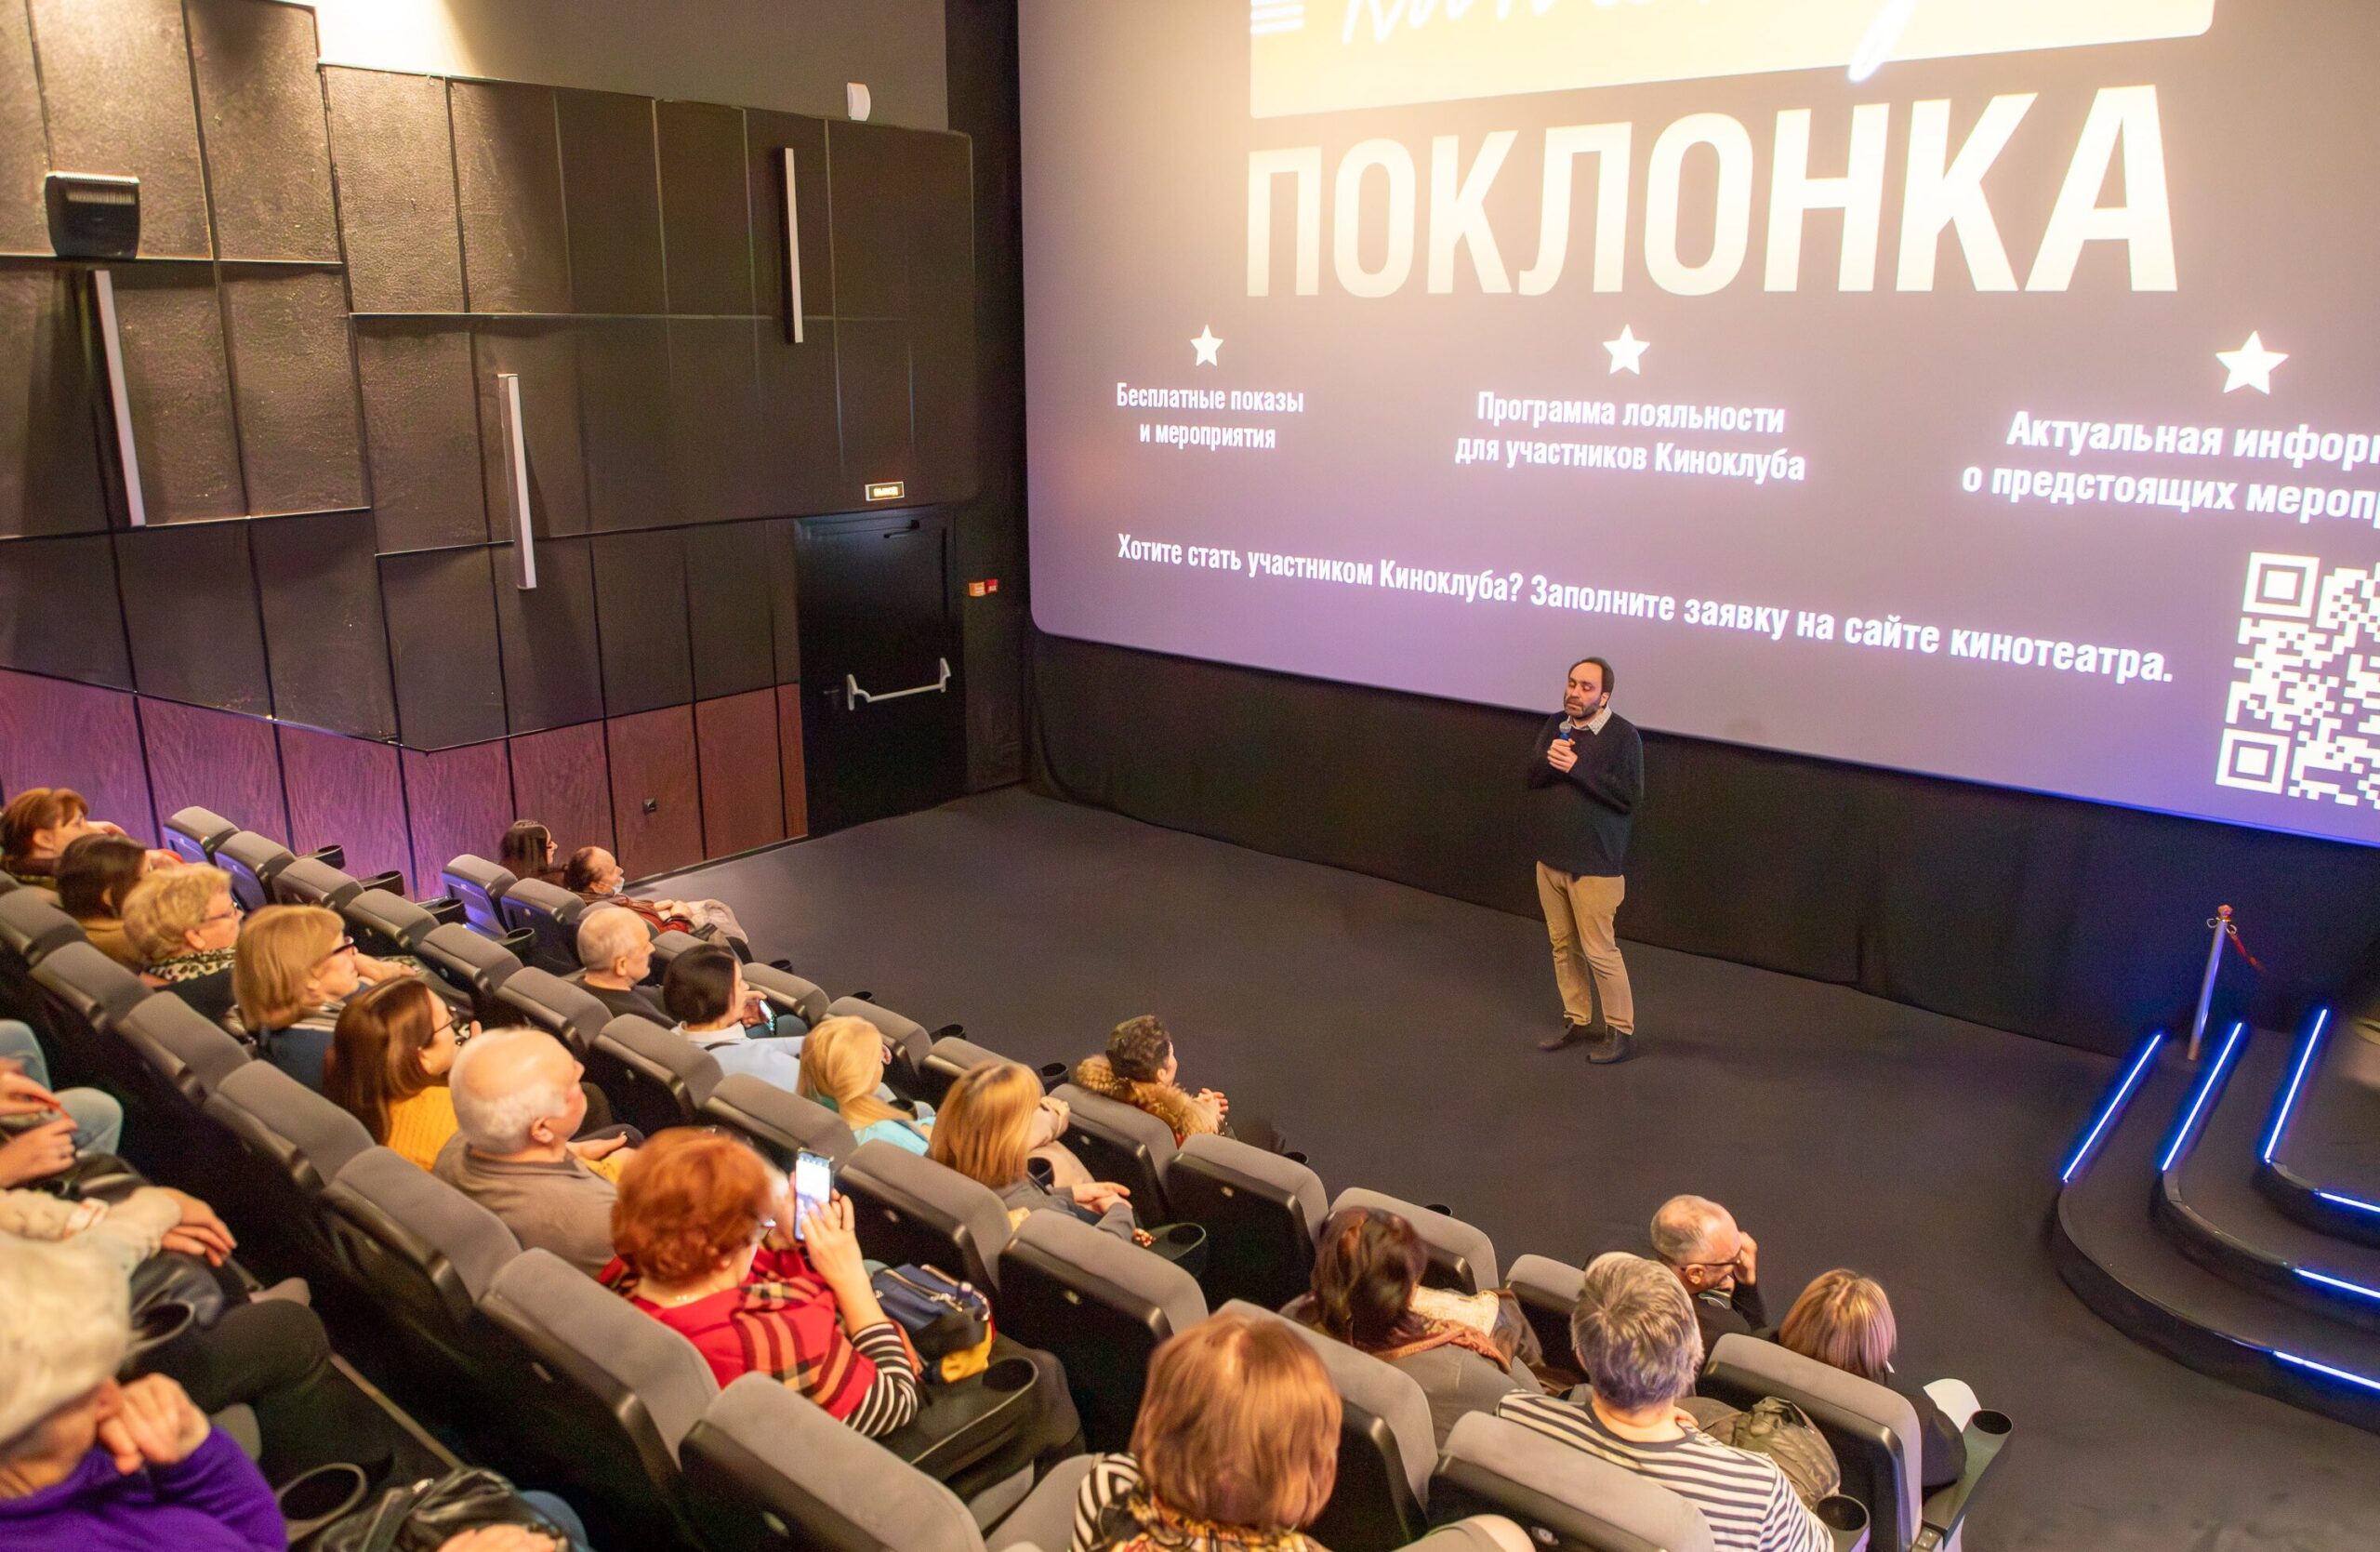 Павел Мирзоев представил свою картину зрителям киноклуба